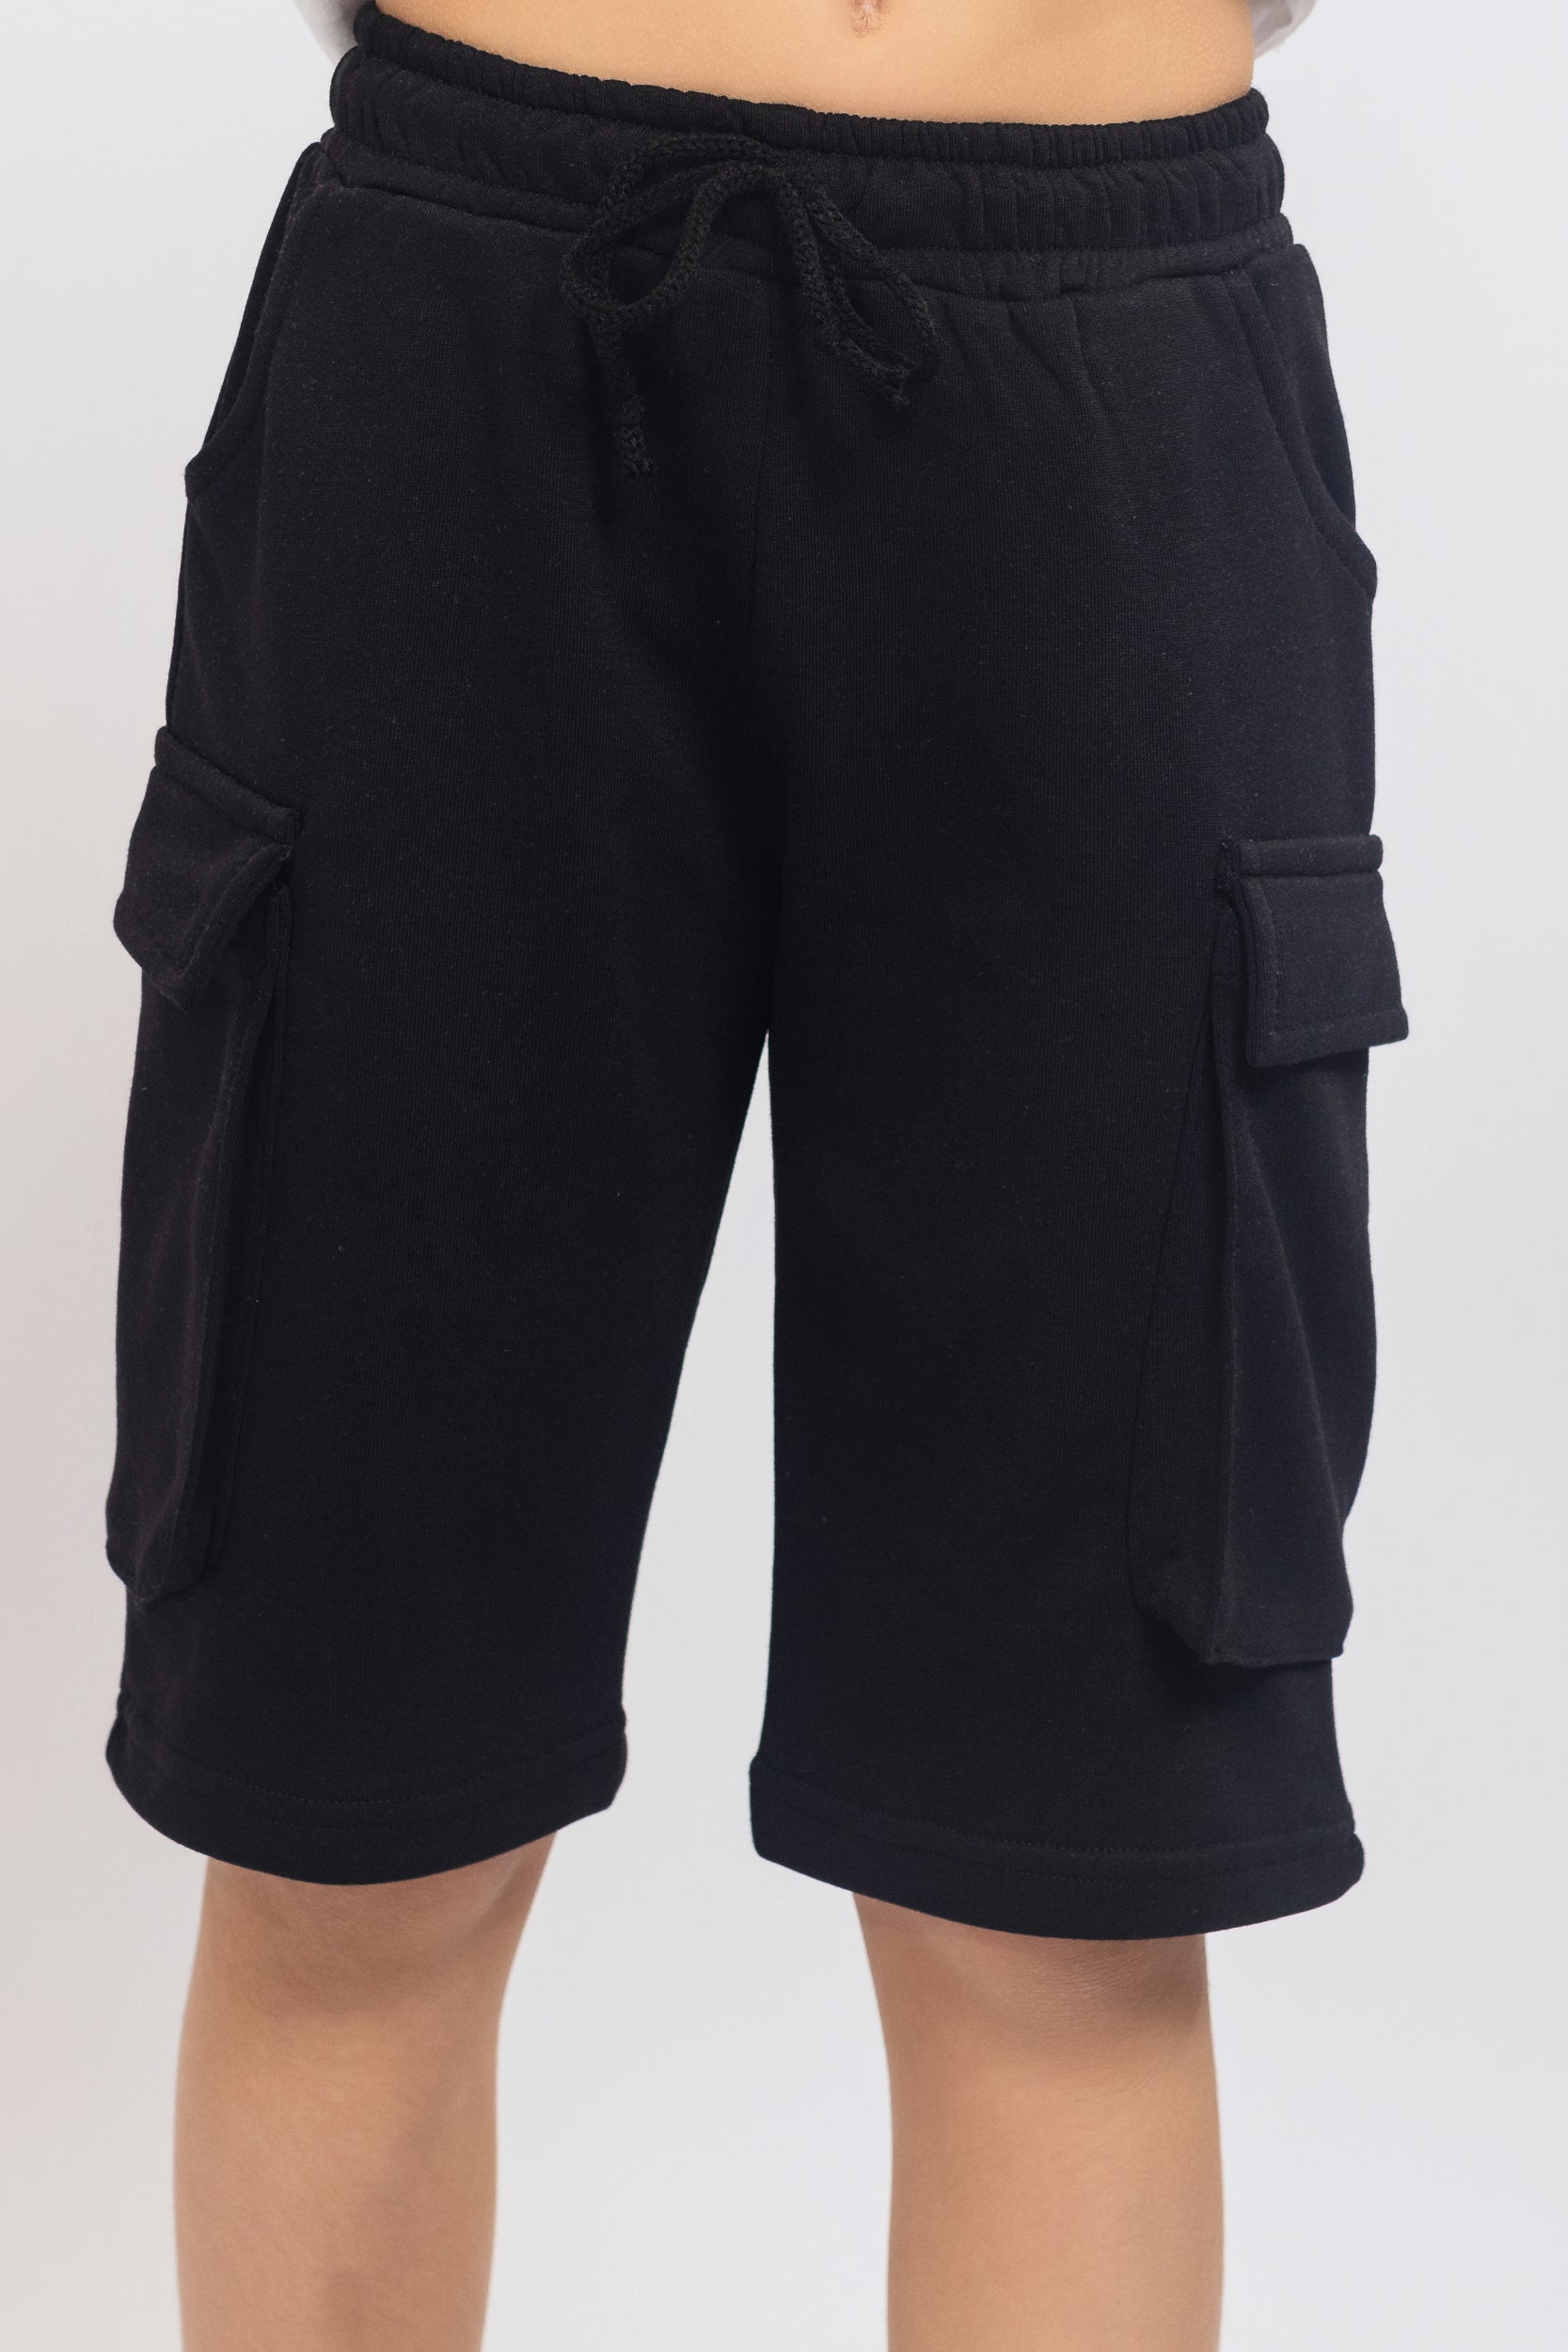 Cargo Shorts For Boys - Black